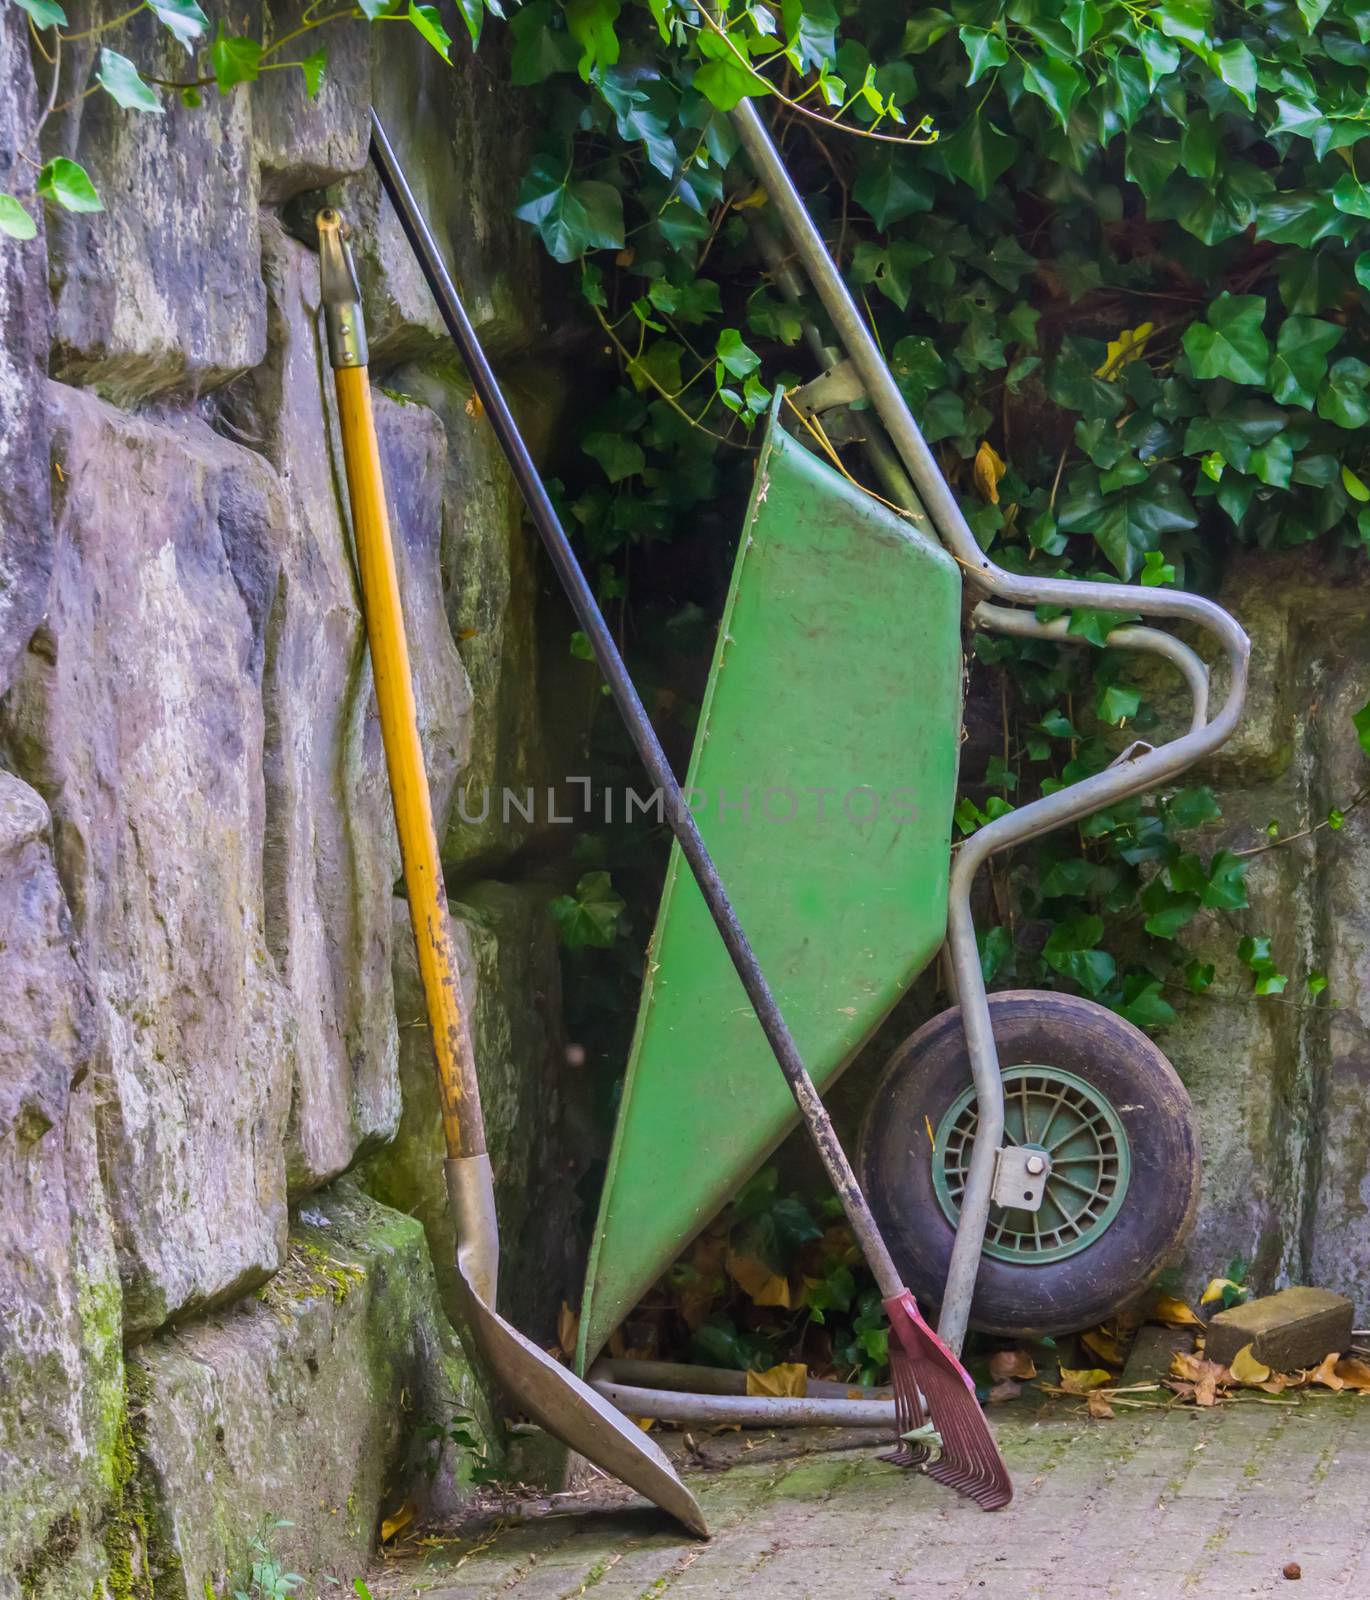 Basic gardening equipment, a wheelbarrow with a shovel and rigid, Garden upkeep tools